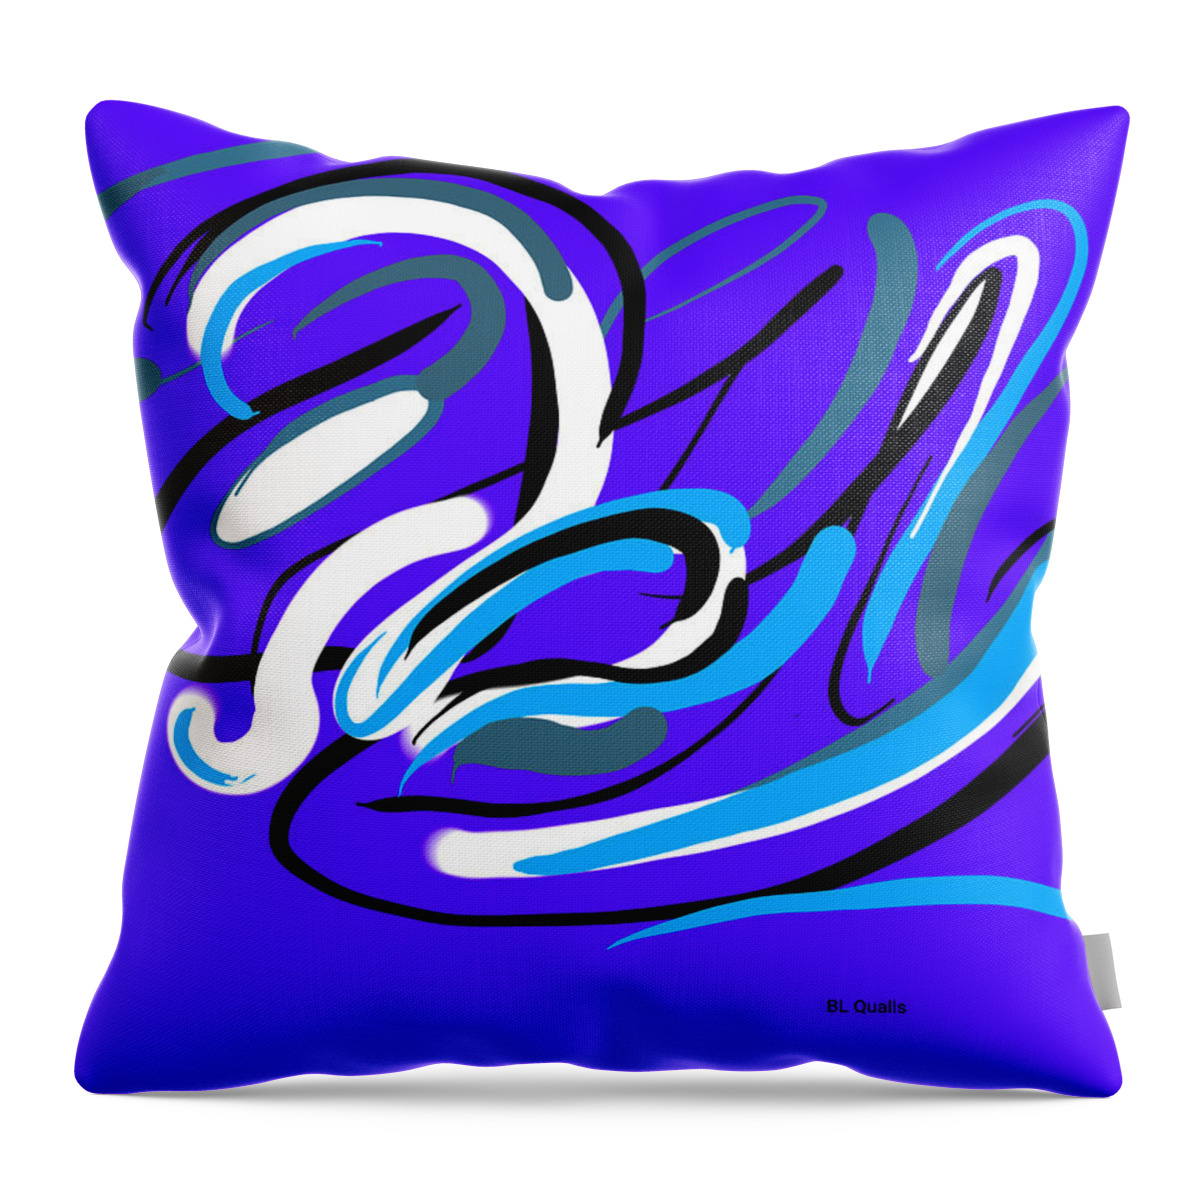 Digital Art Throw Pillow featuring the digital art New Lines 4 by B L Qualls